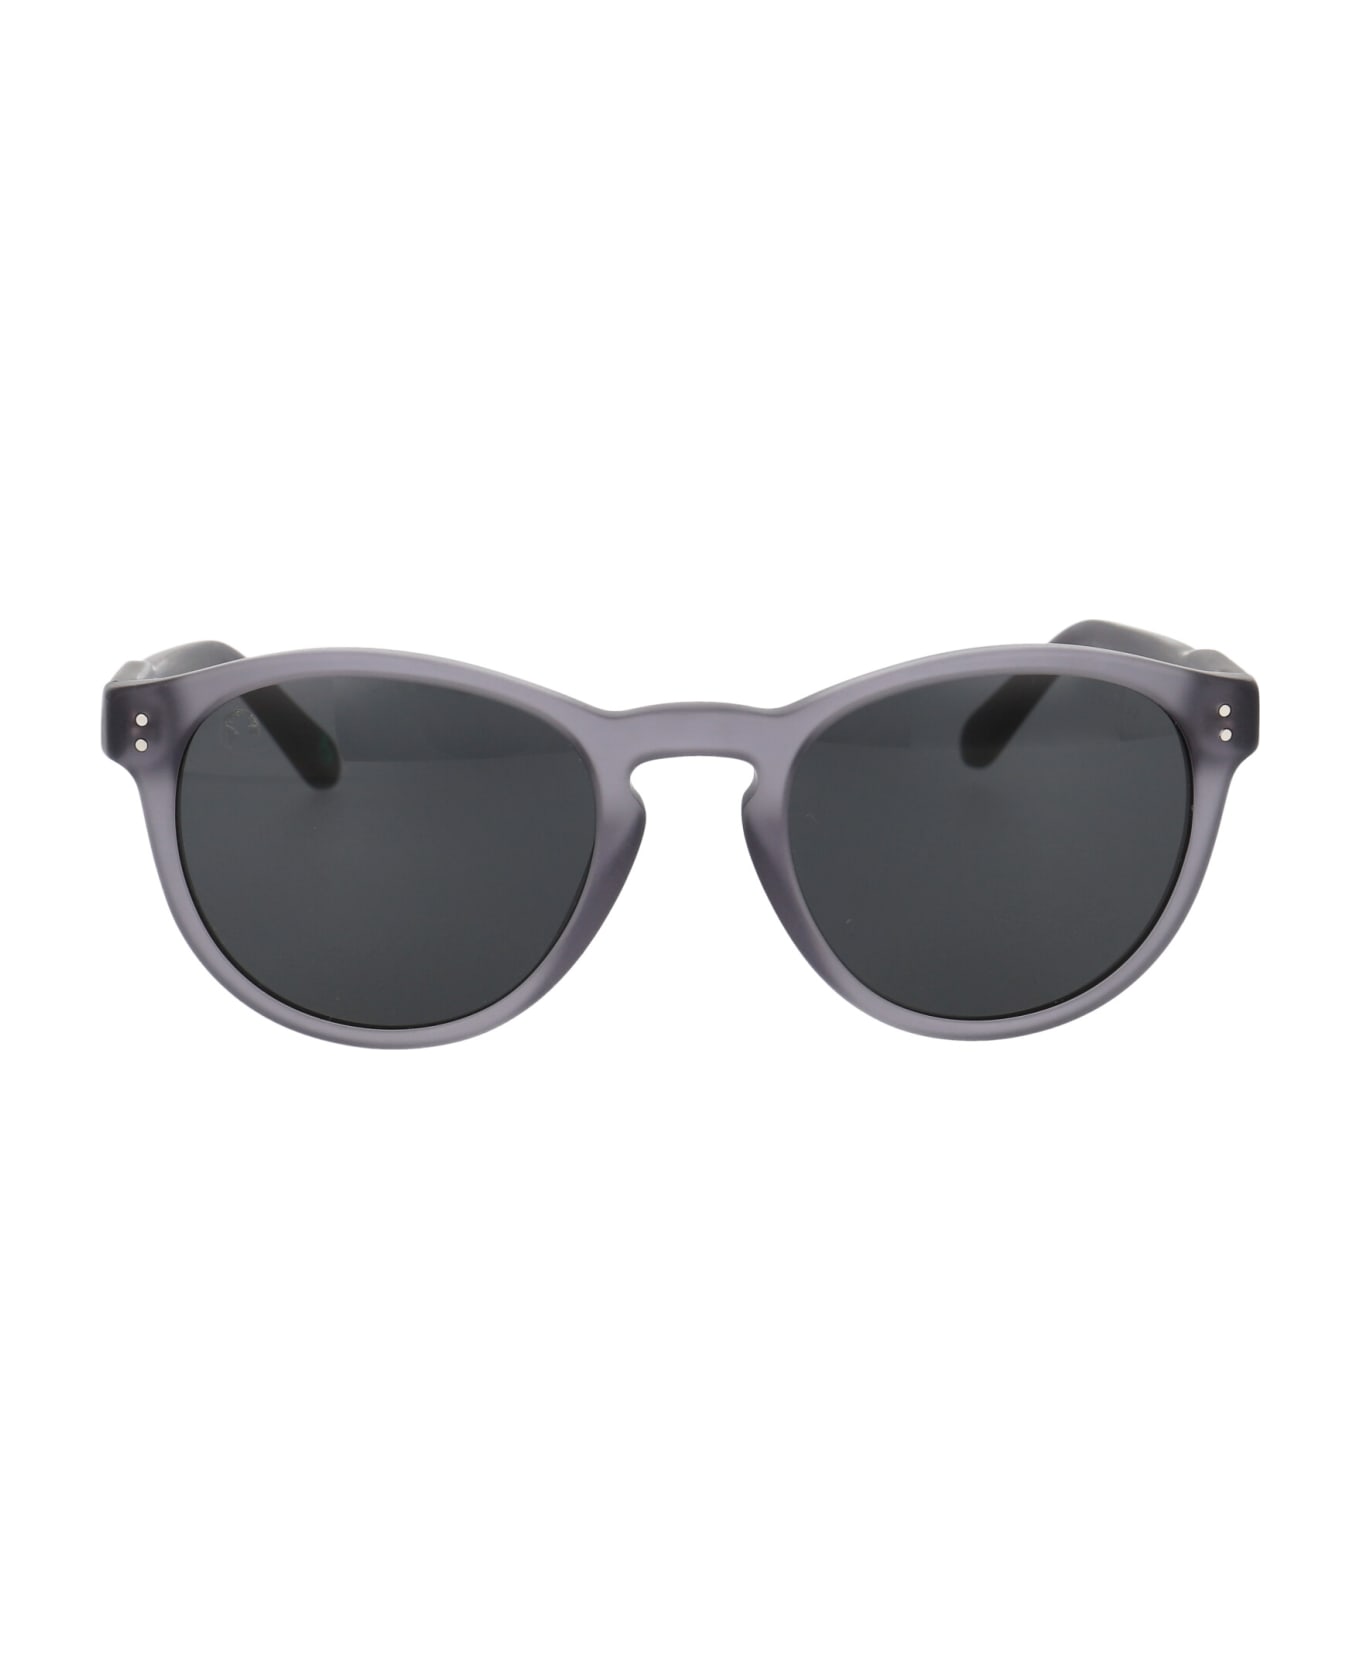 Polo Ralph Lauren 0ph4172 Sunglasses - 595387 MATTE TRANSPARENT DARK GREY